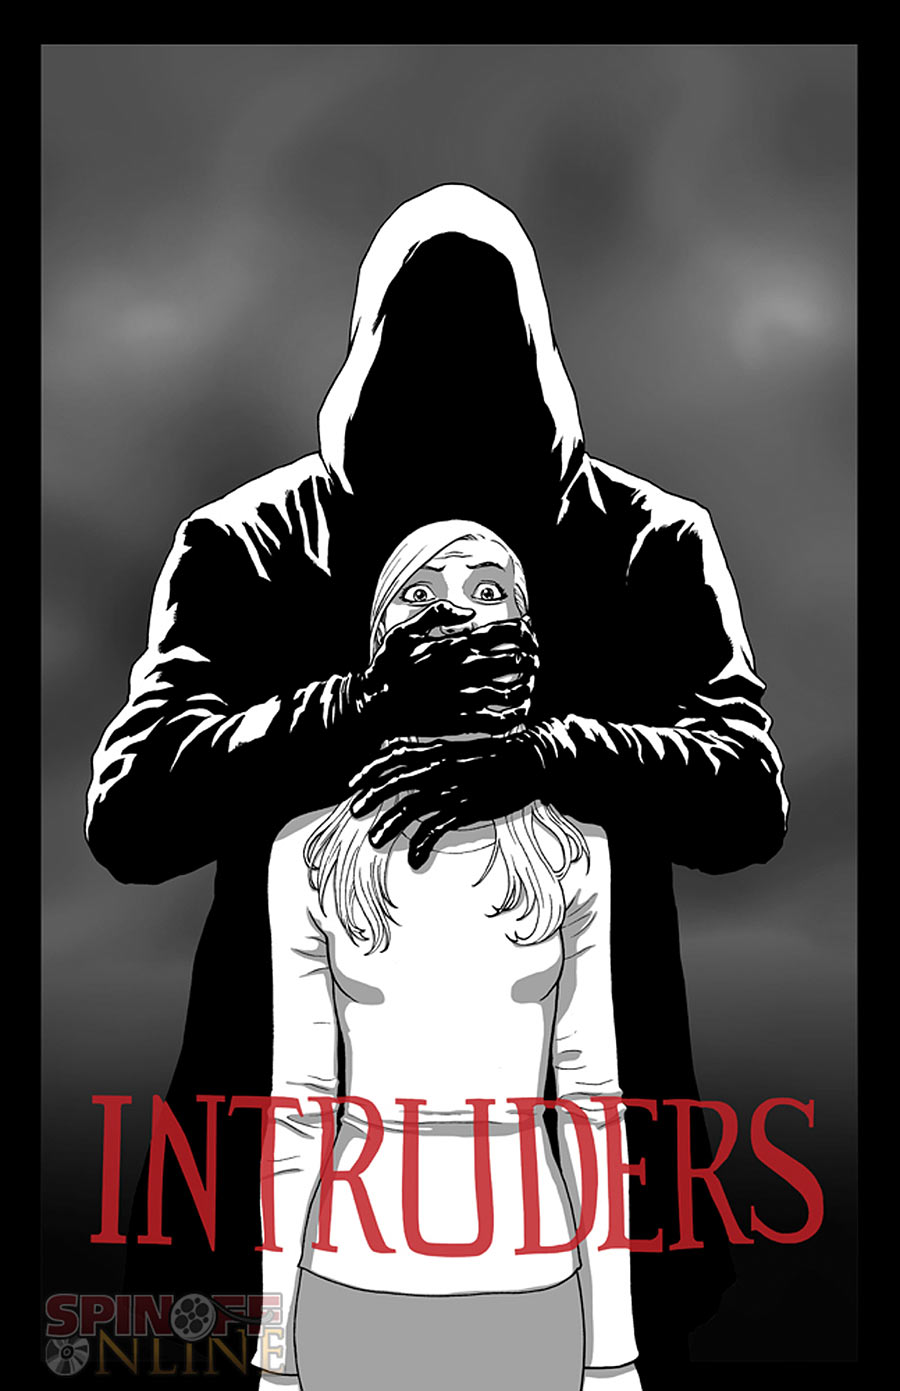 Intruders #26